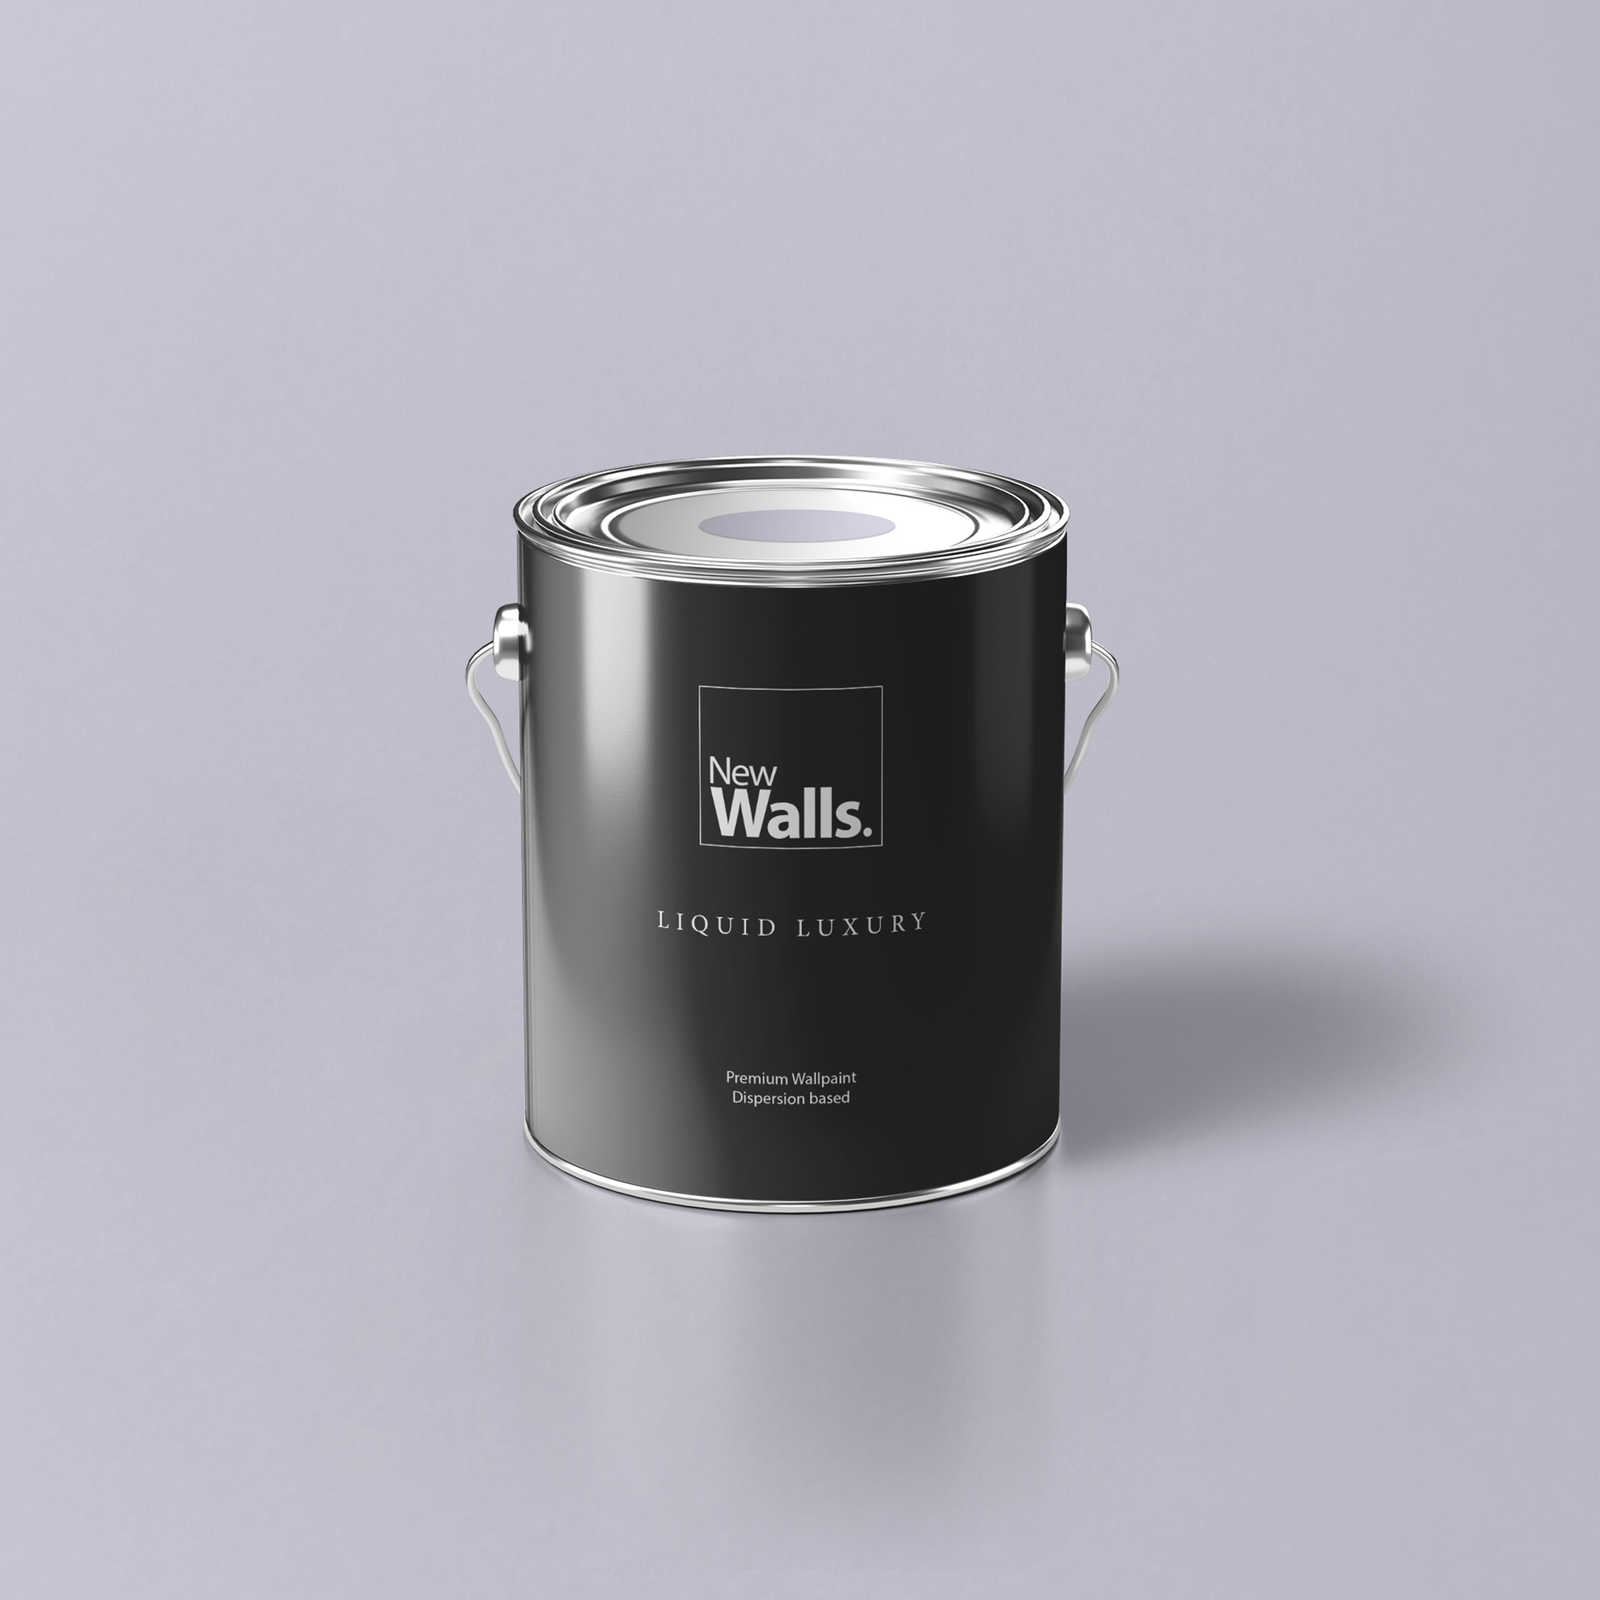 Premium Wall Paint pleasant lilac »Magical Mauve« NW203 – 2.5 litre
